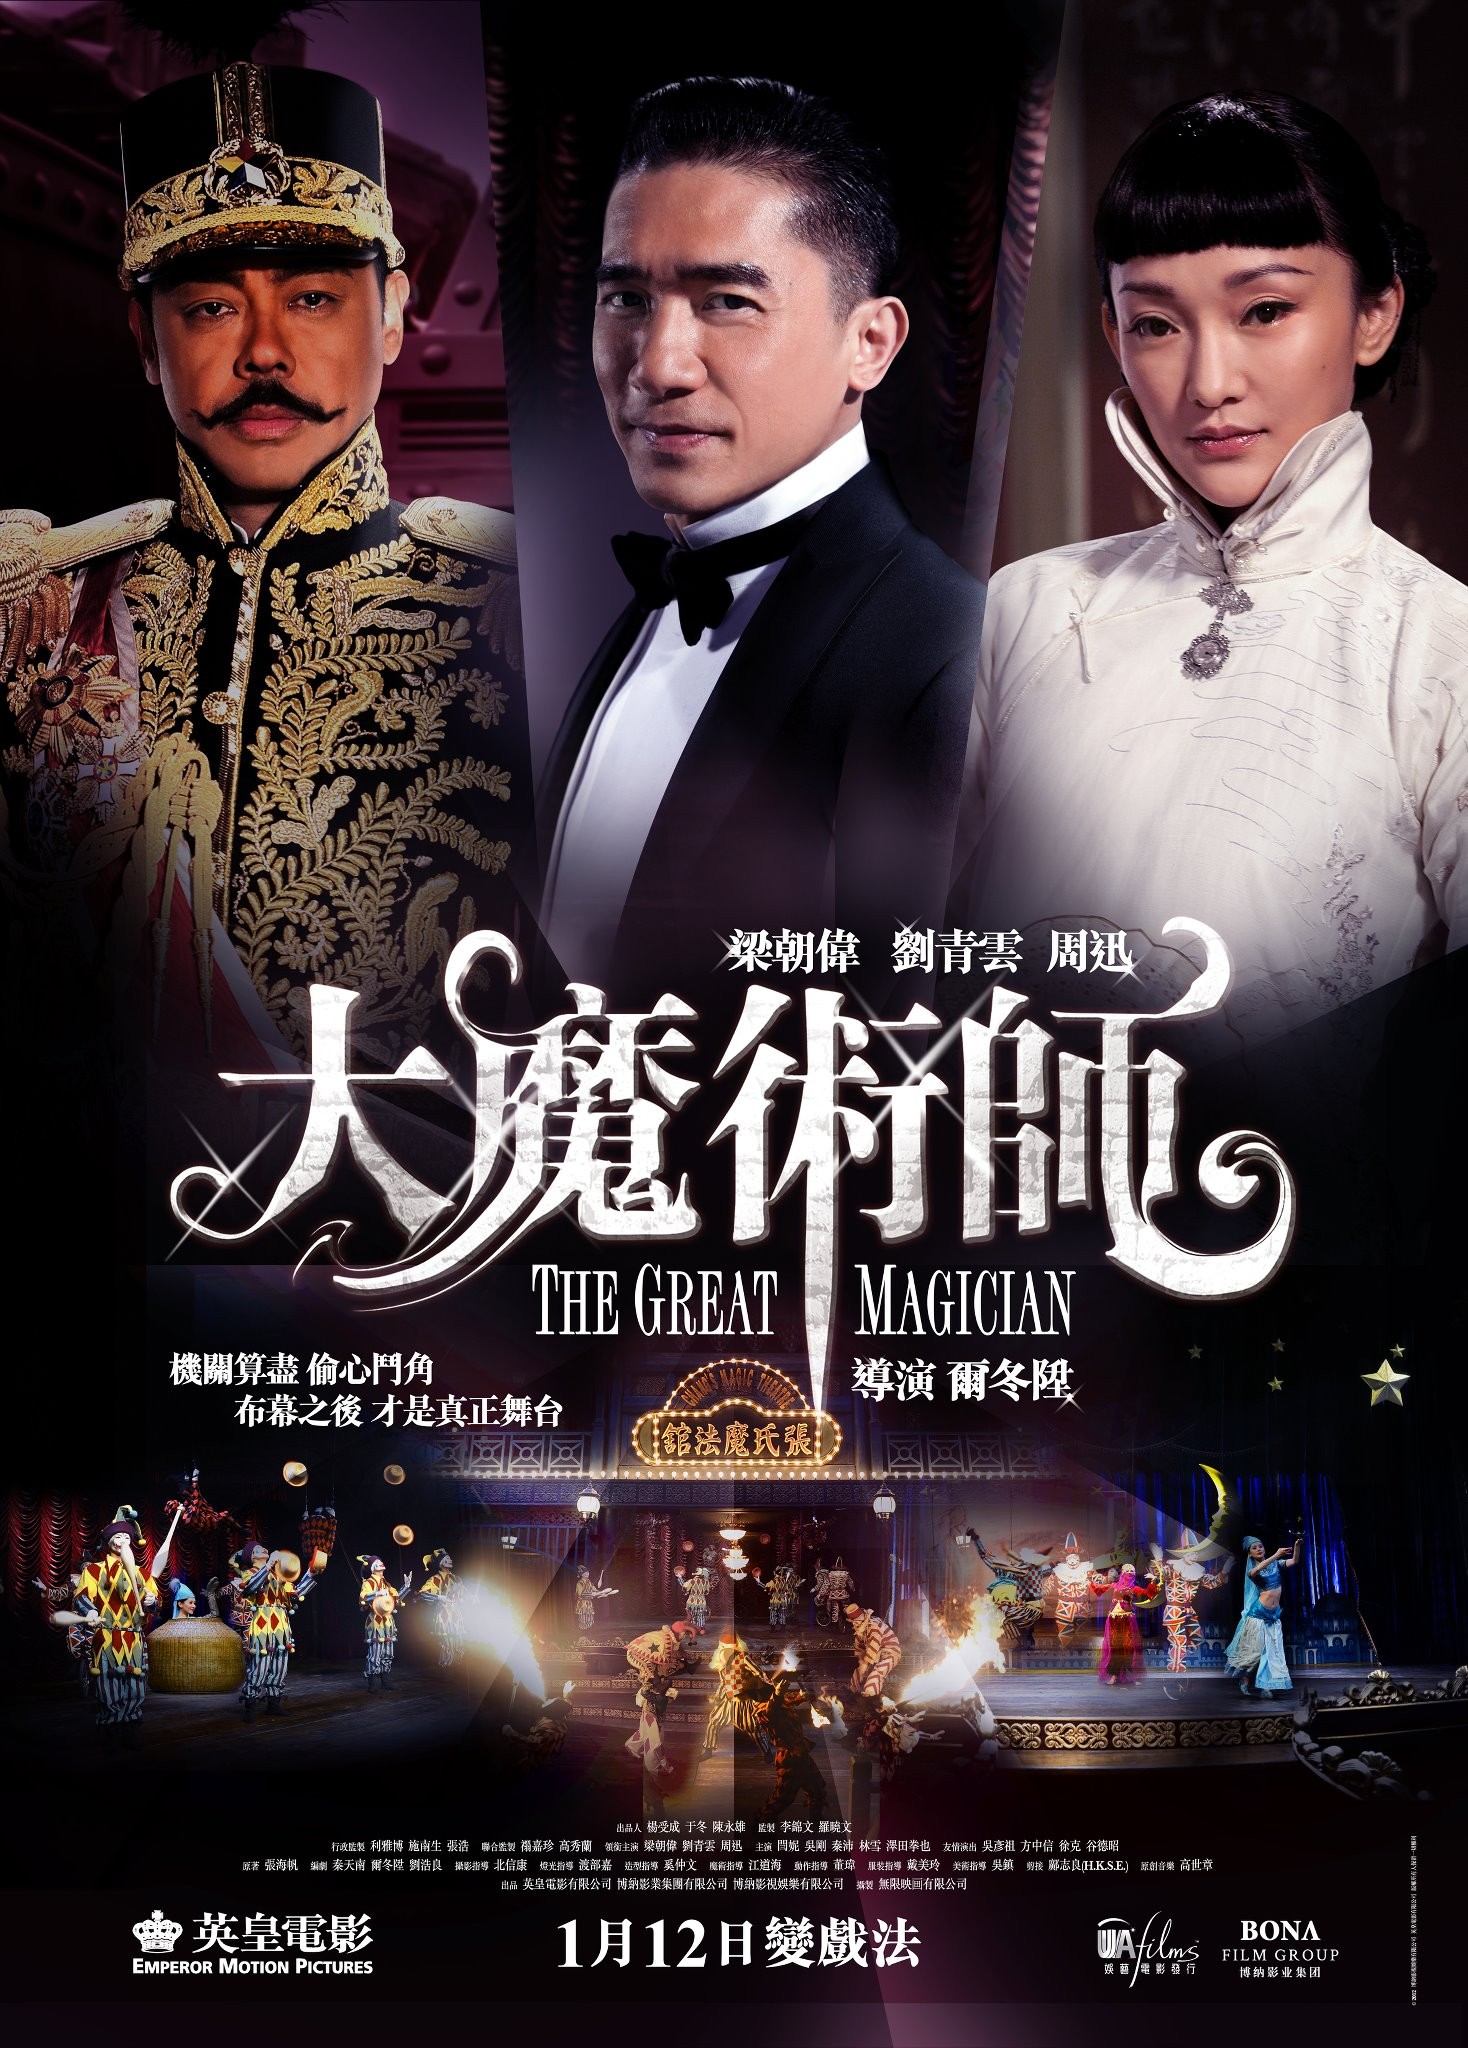 Mega Sized Movie Poster Image for Daai mo seut si (#2 of 5)